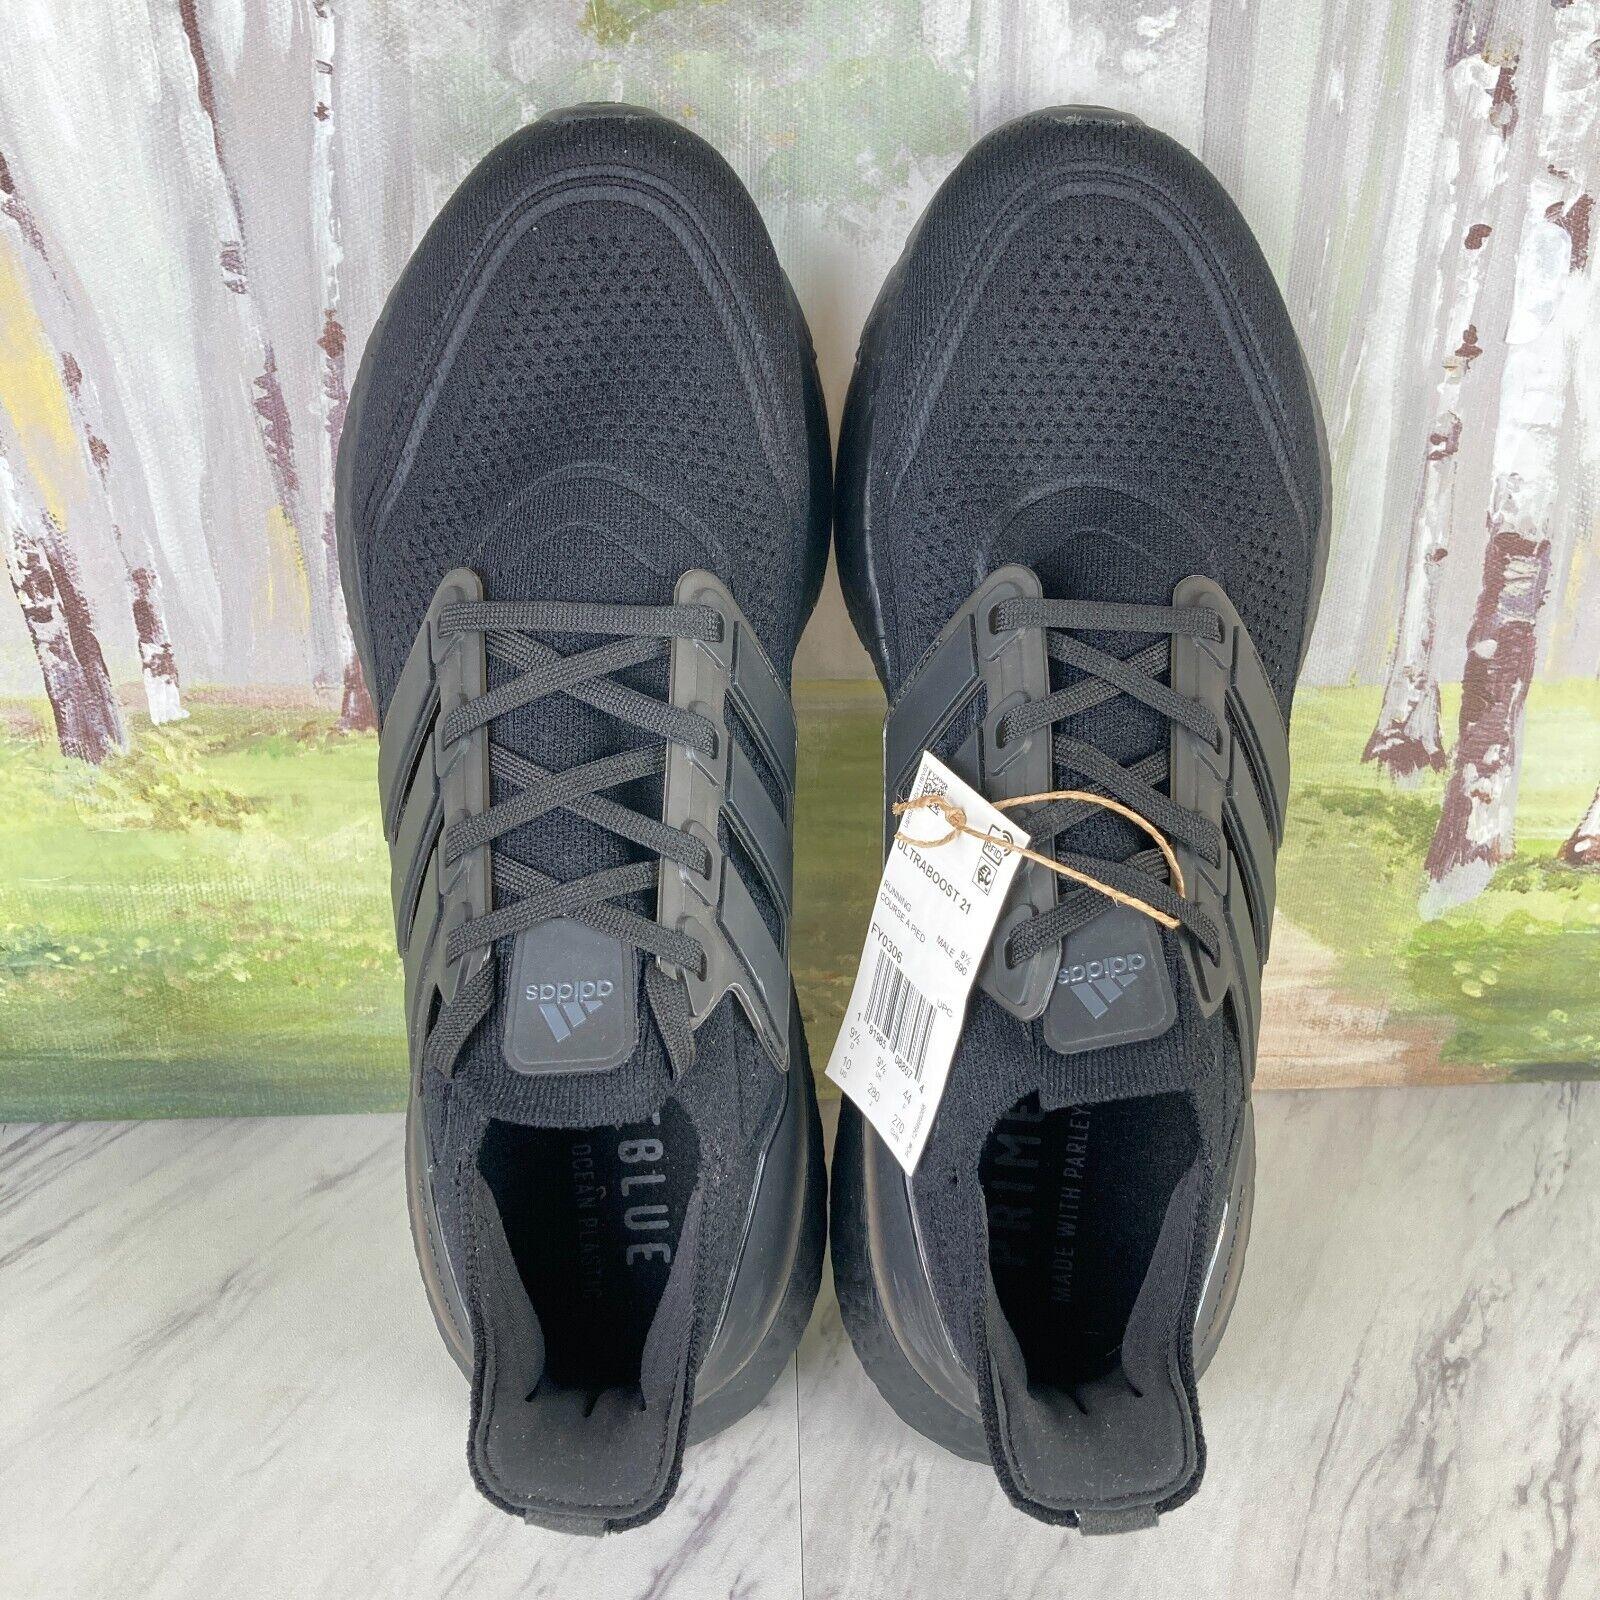 Adidas shoes Ultraboost - Black 8